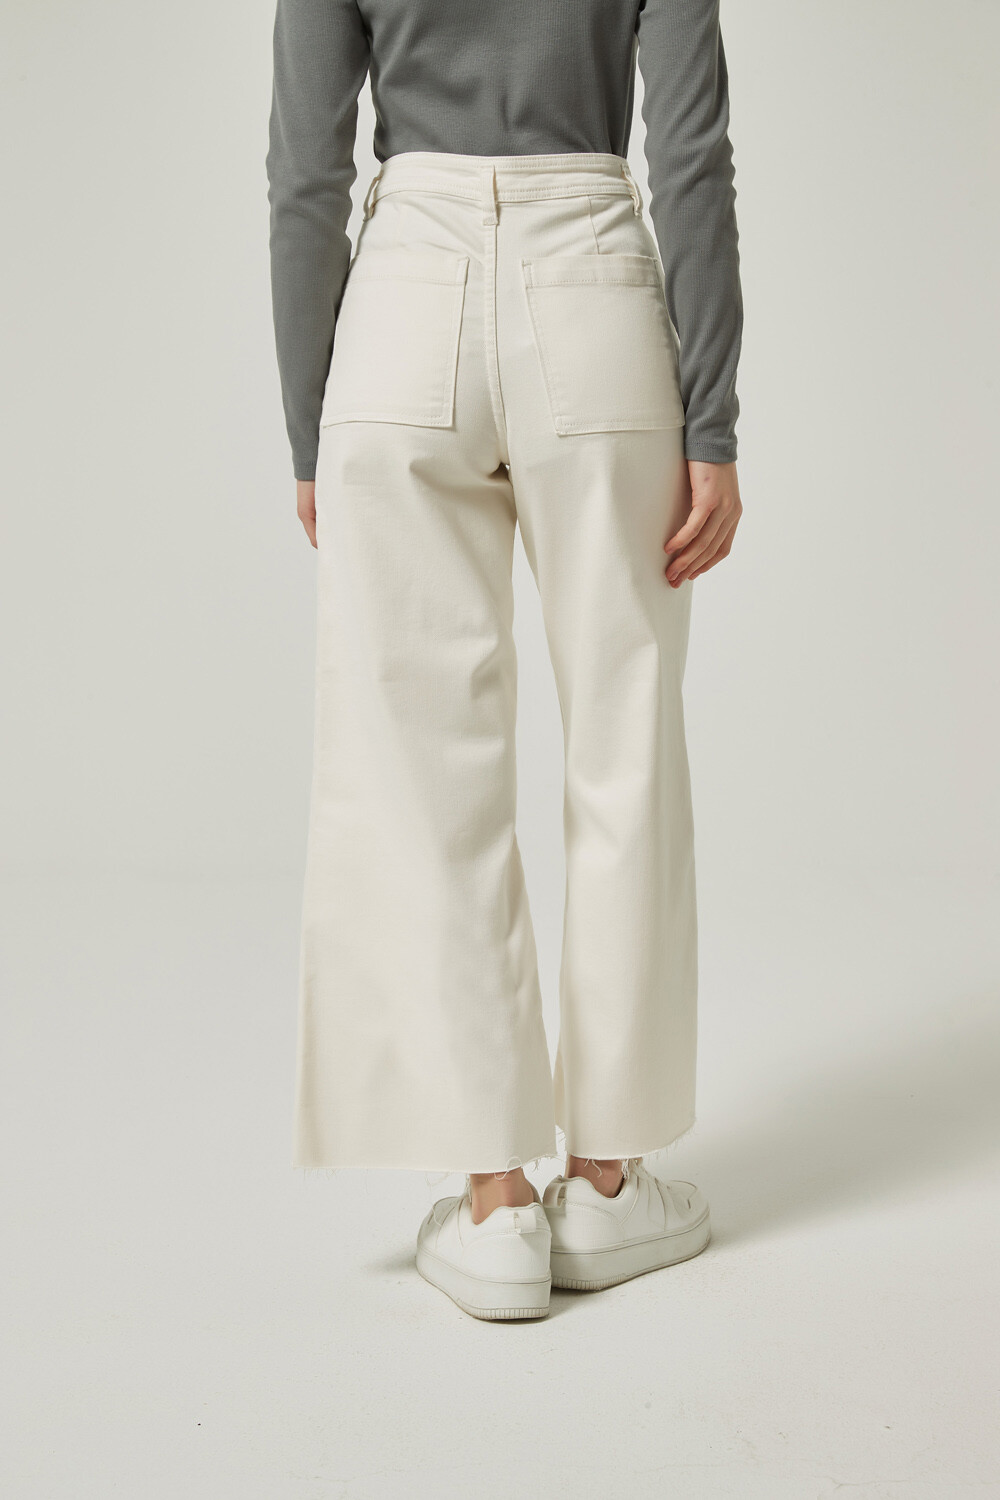 Pantalon Adeline Crudo / Natural